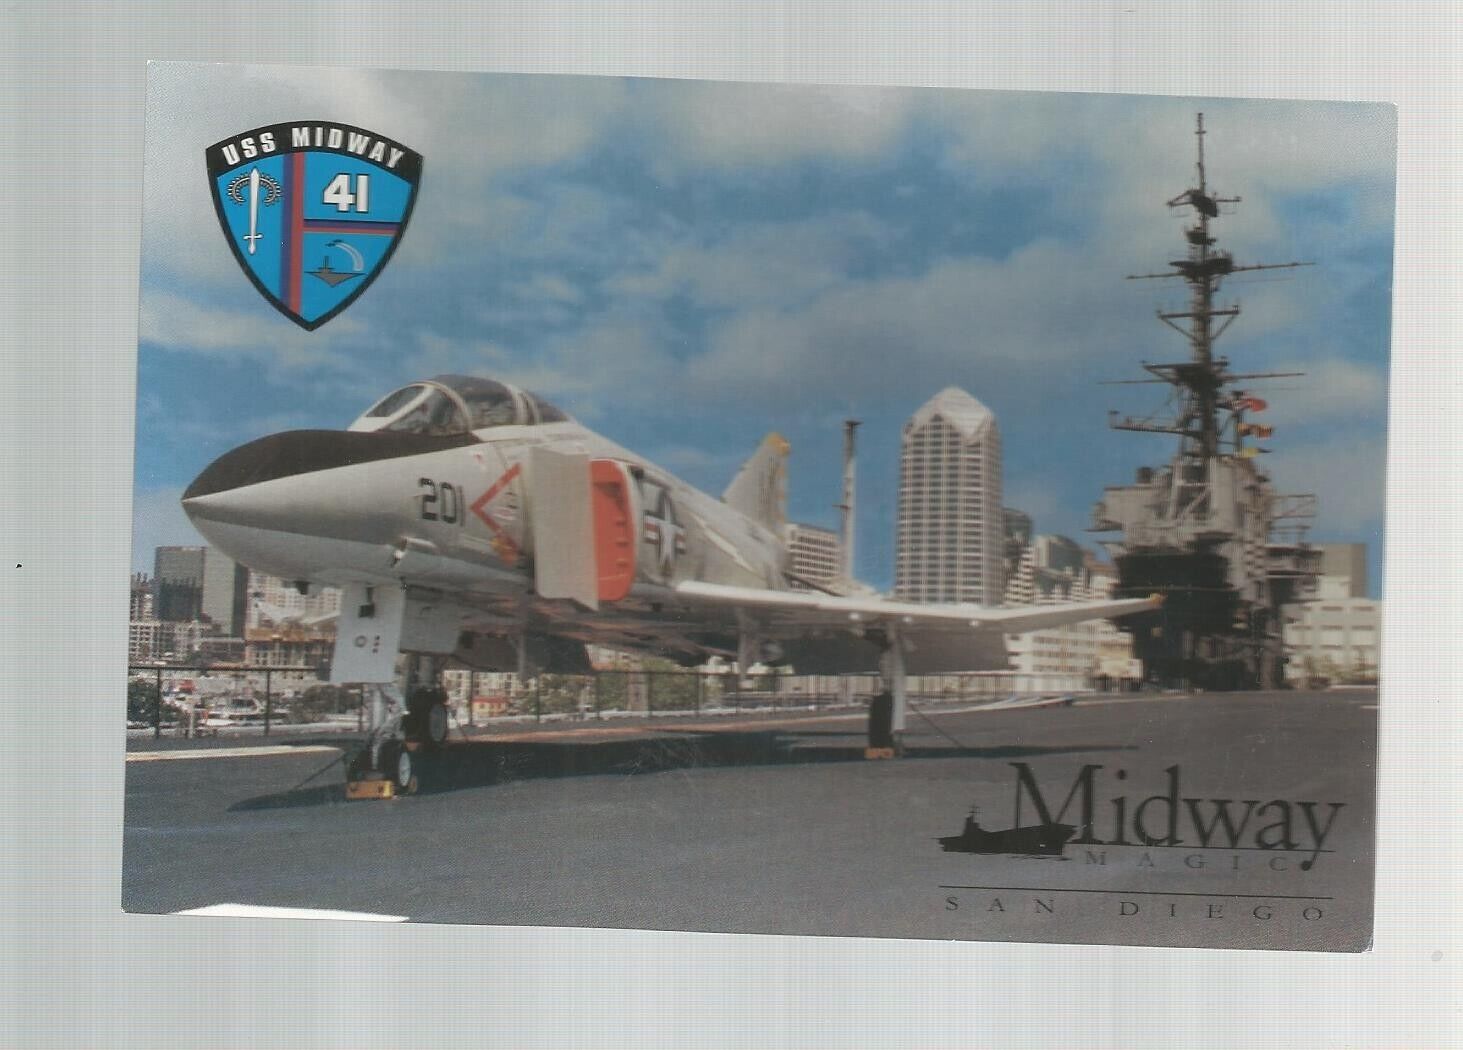 USS MIDWAY CV-41  NAVY PIER SAN DIEGO CA   Postcard